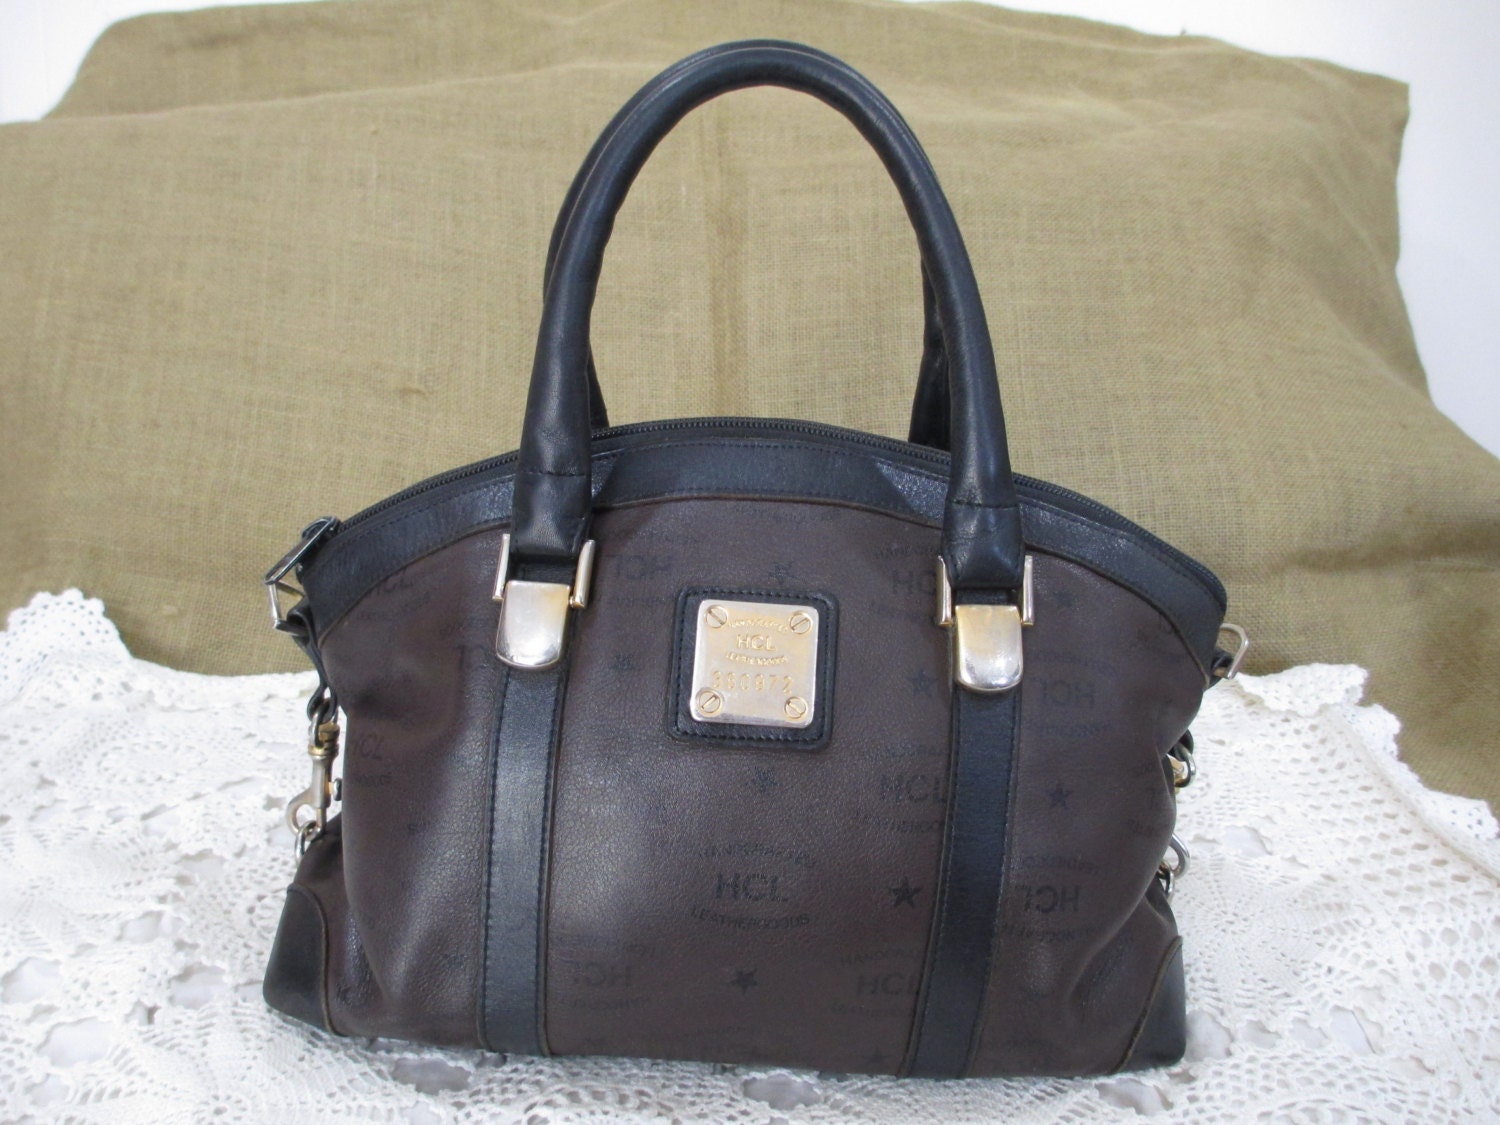 Genuine HCL brown leather signature logo satchel doctor bag